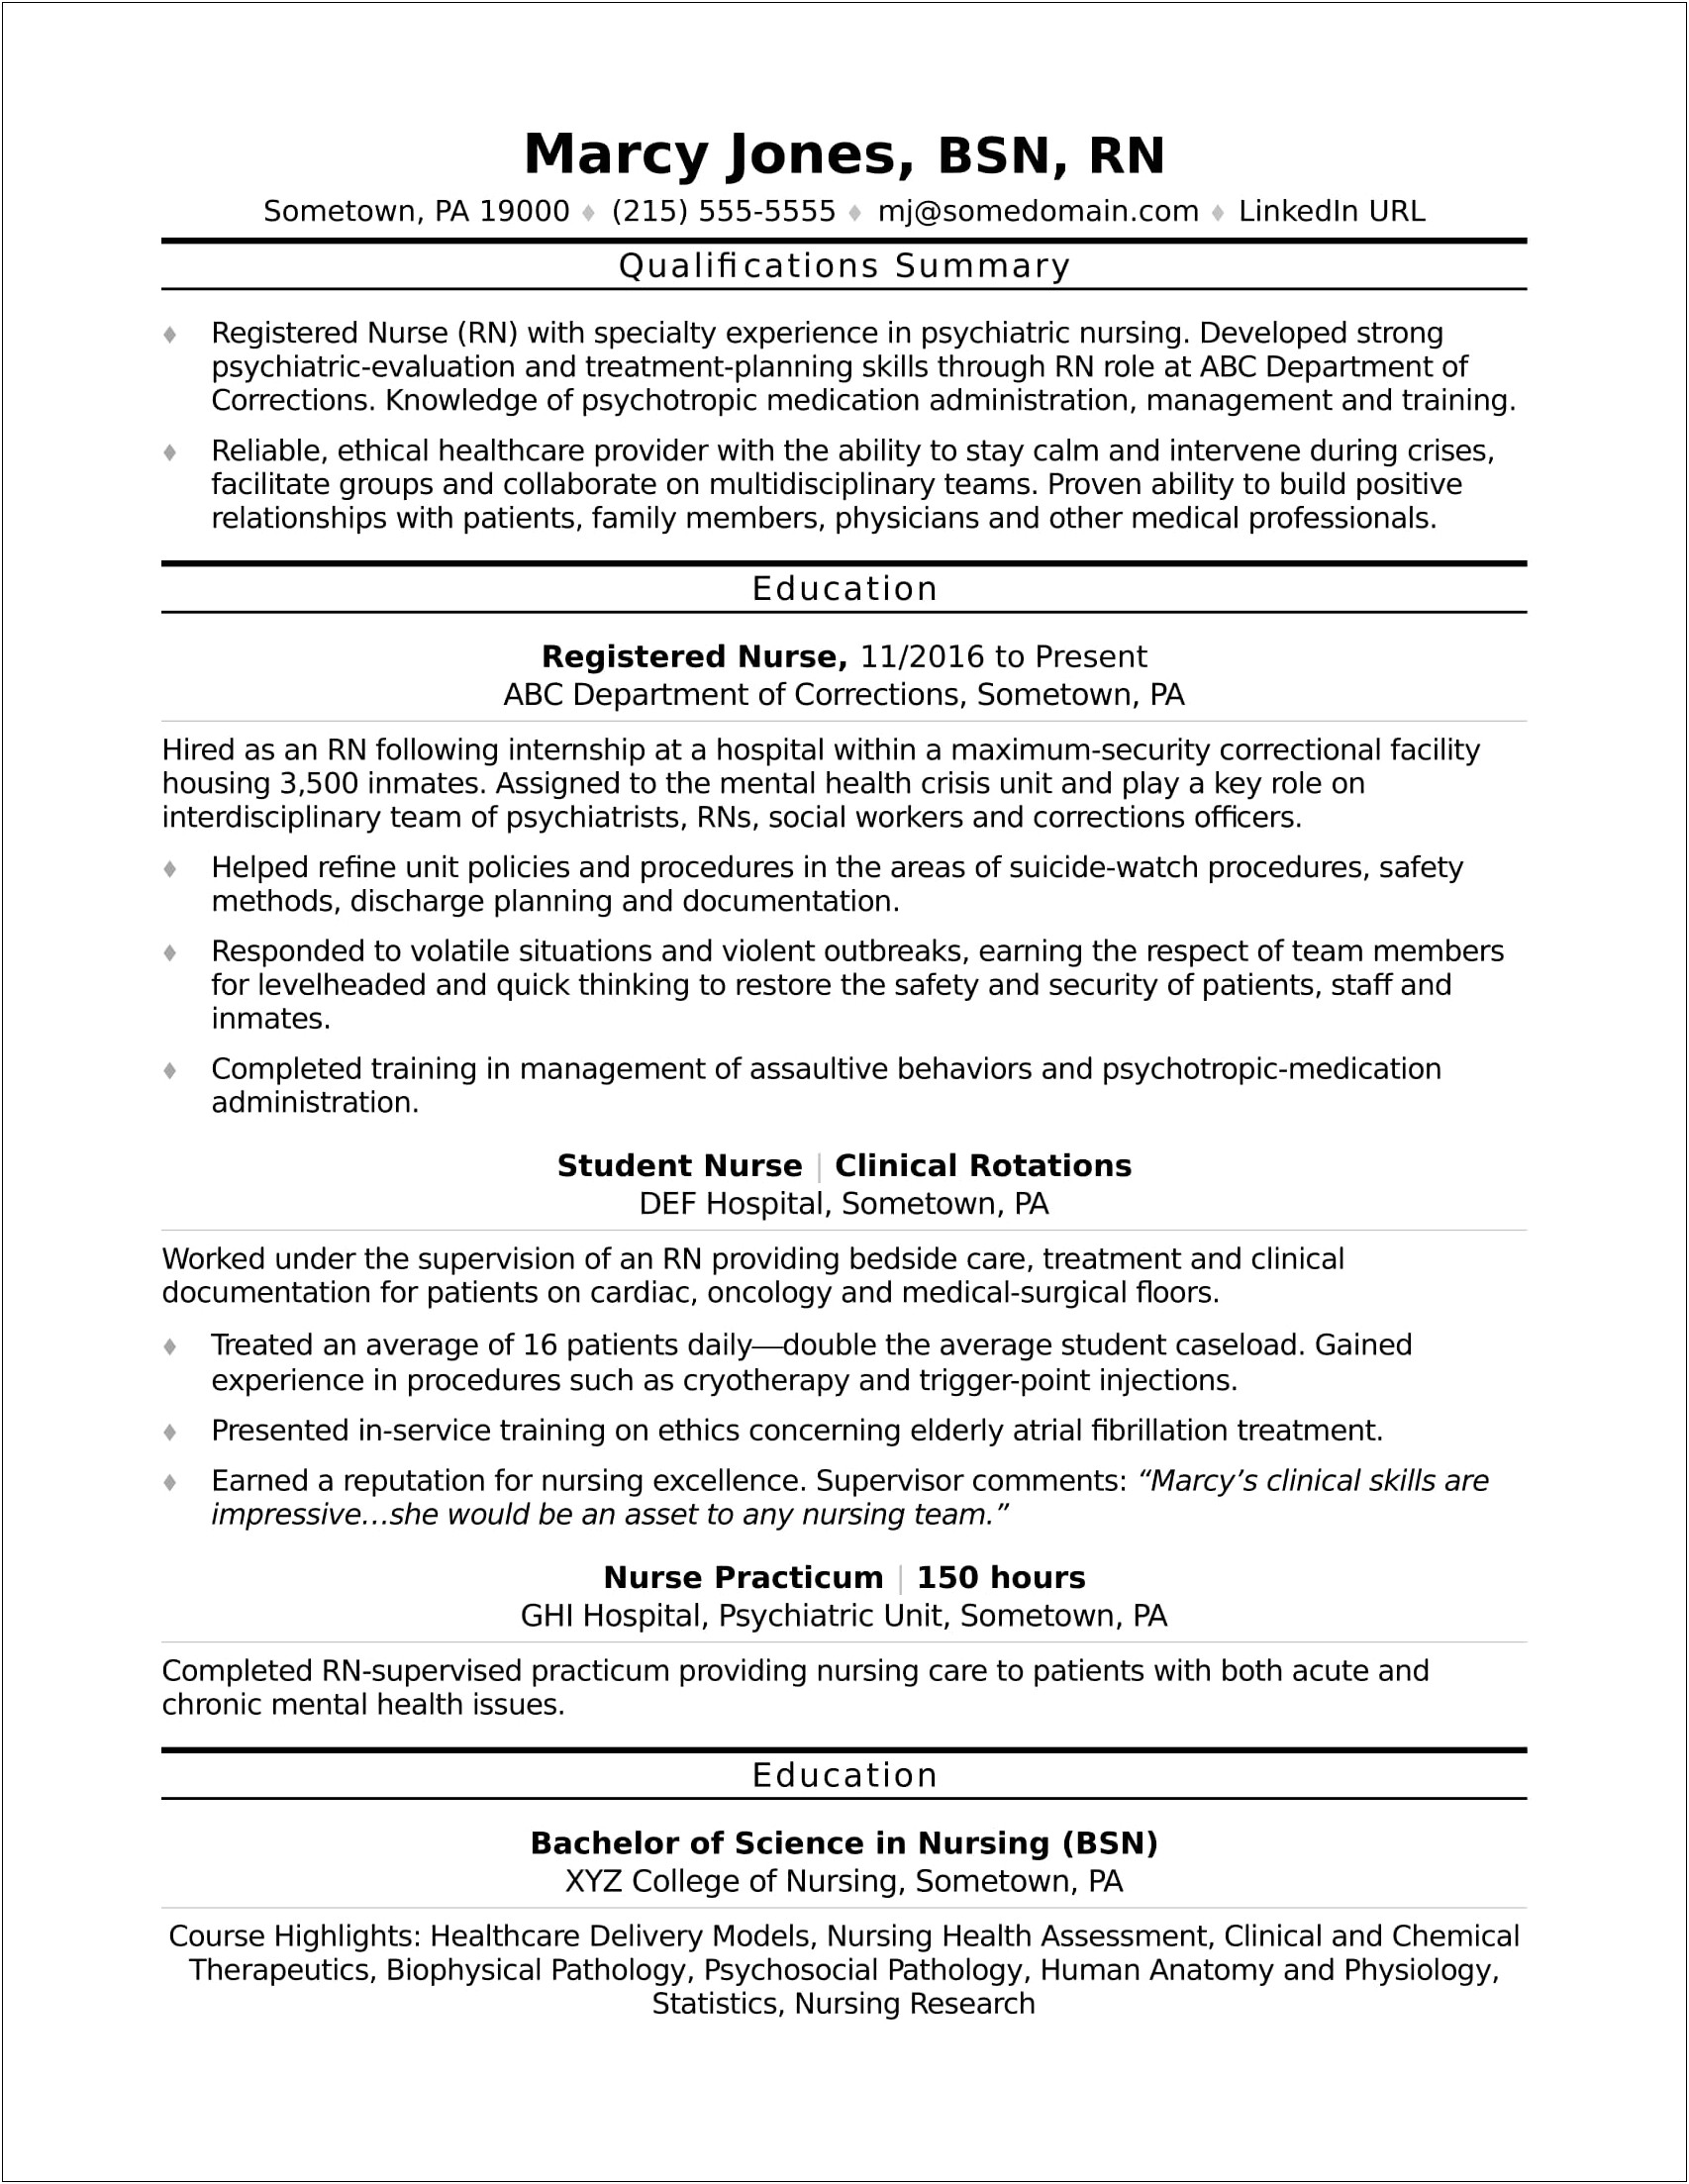 Nursing Professional Summary Resume Example